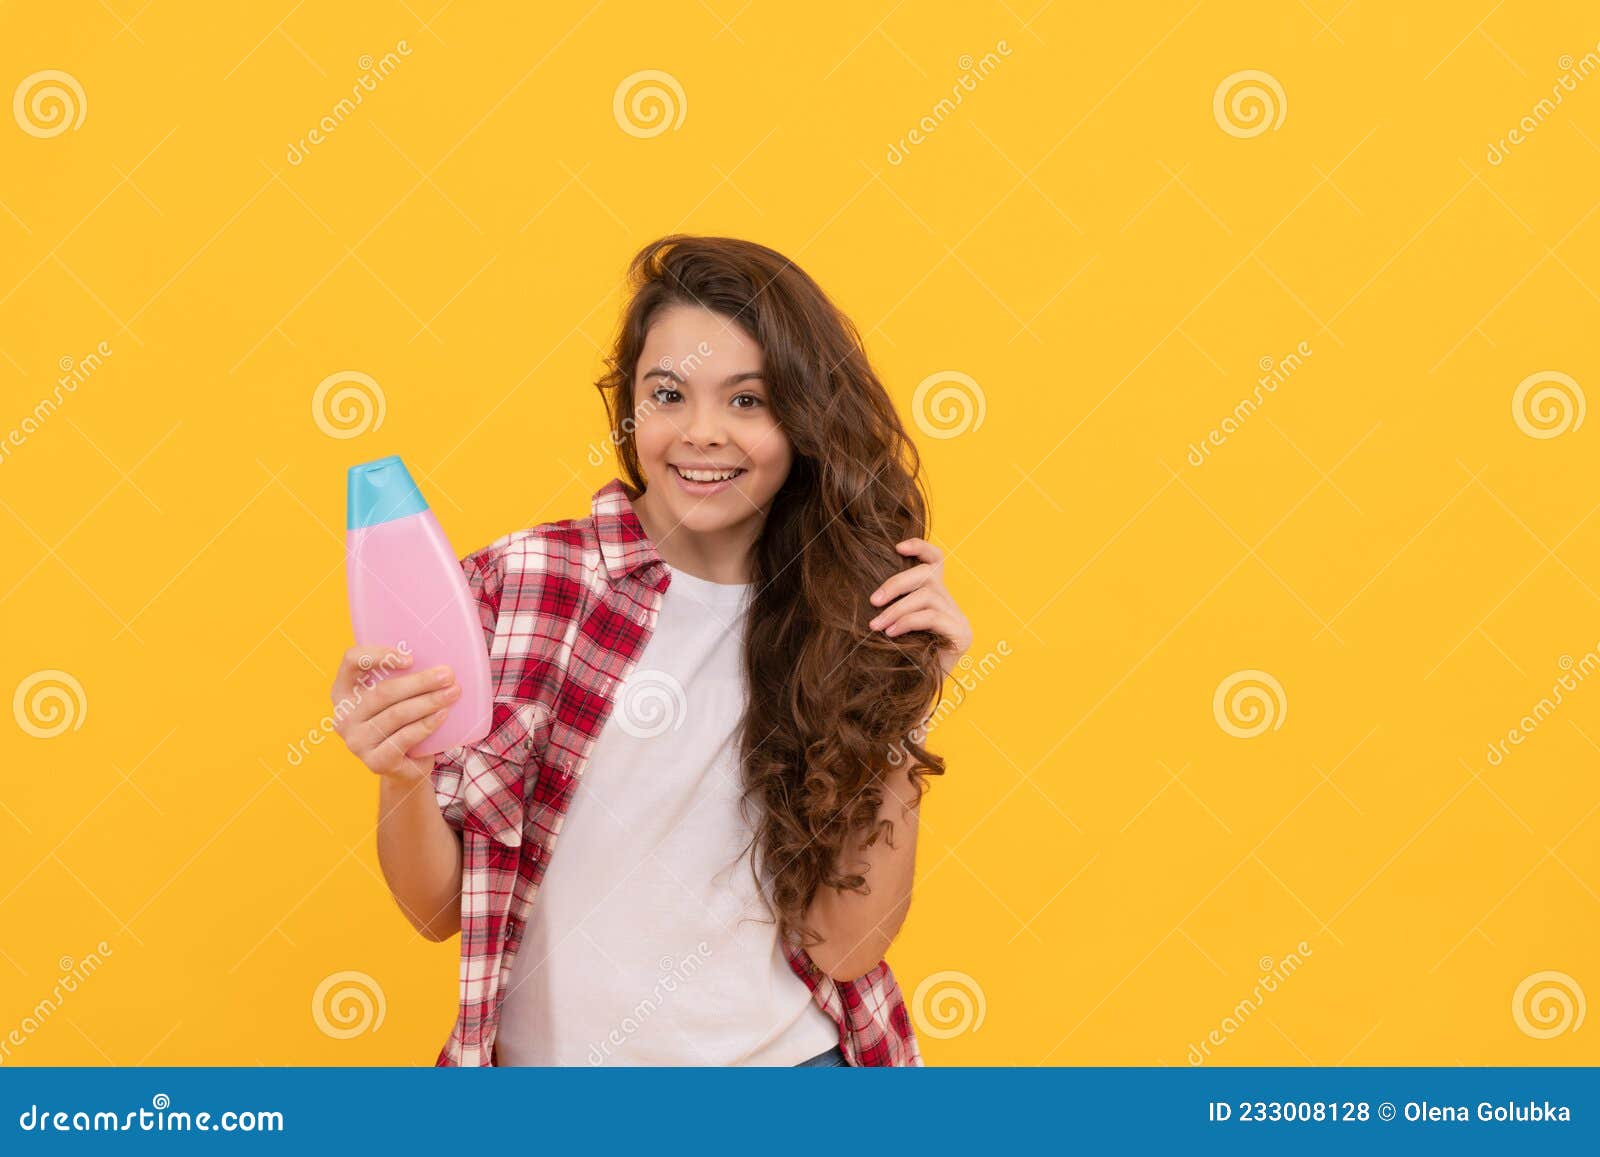 Kritiek Reorganiseren kopen Presenting Cosmetic Product. Beauty. Kid Use Shower Gel. Happy Teen Girl  with Shampoo Bottle. Stock Photo - Image of bottle, salon: 233008128